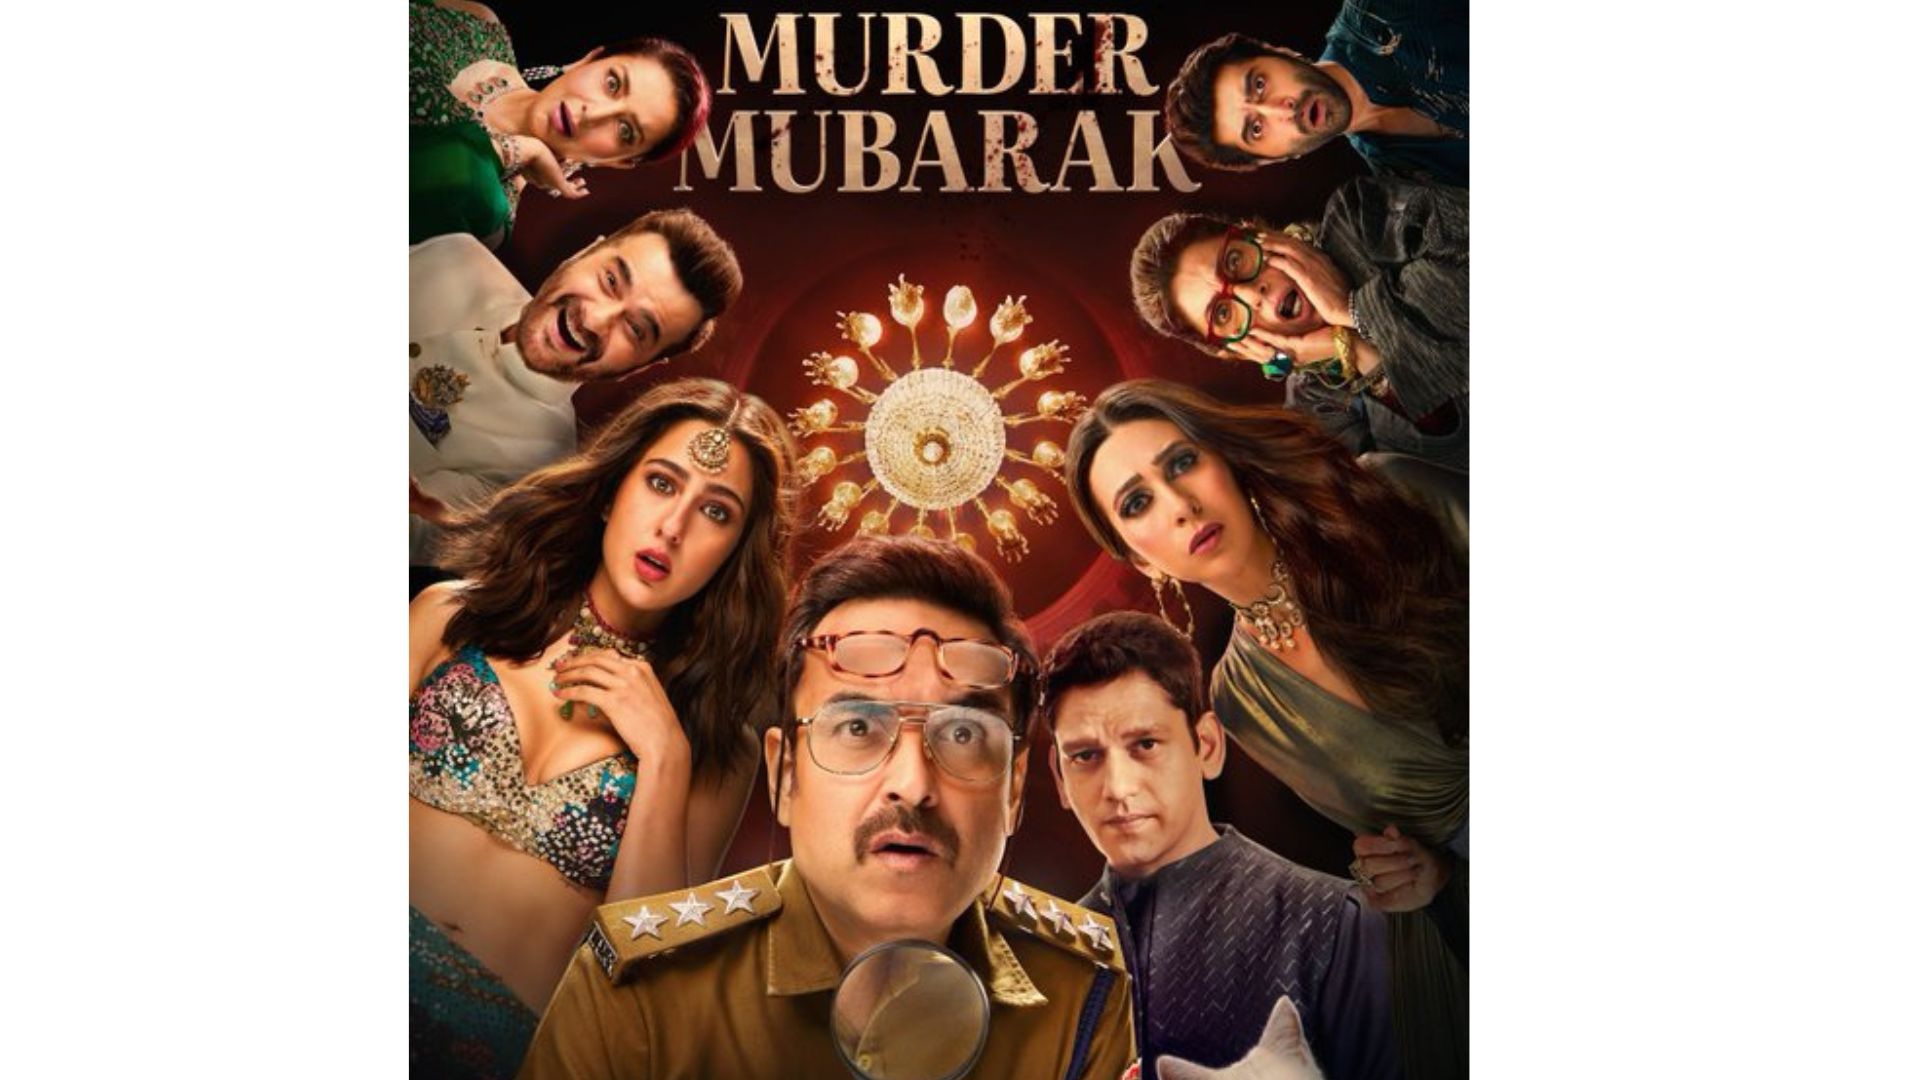 Murder Mubarak Trailer: Murder Mubarak is coming to Netflix on March 15th only